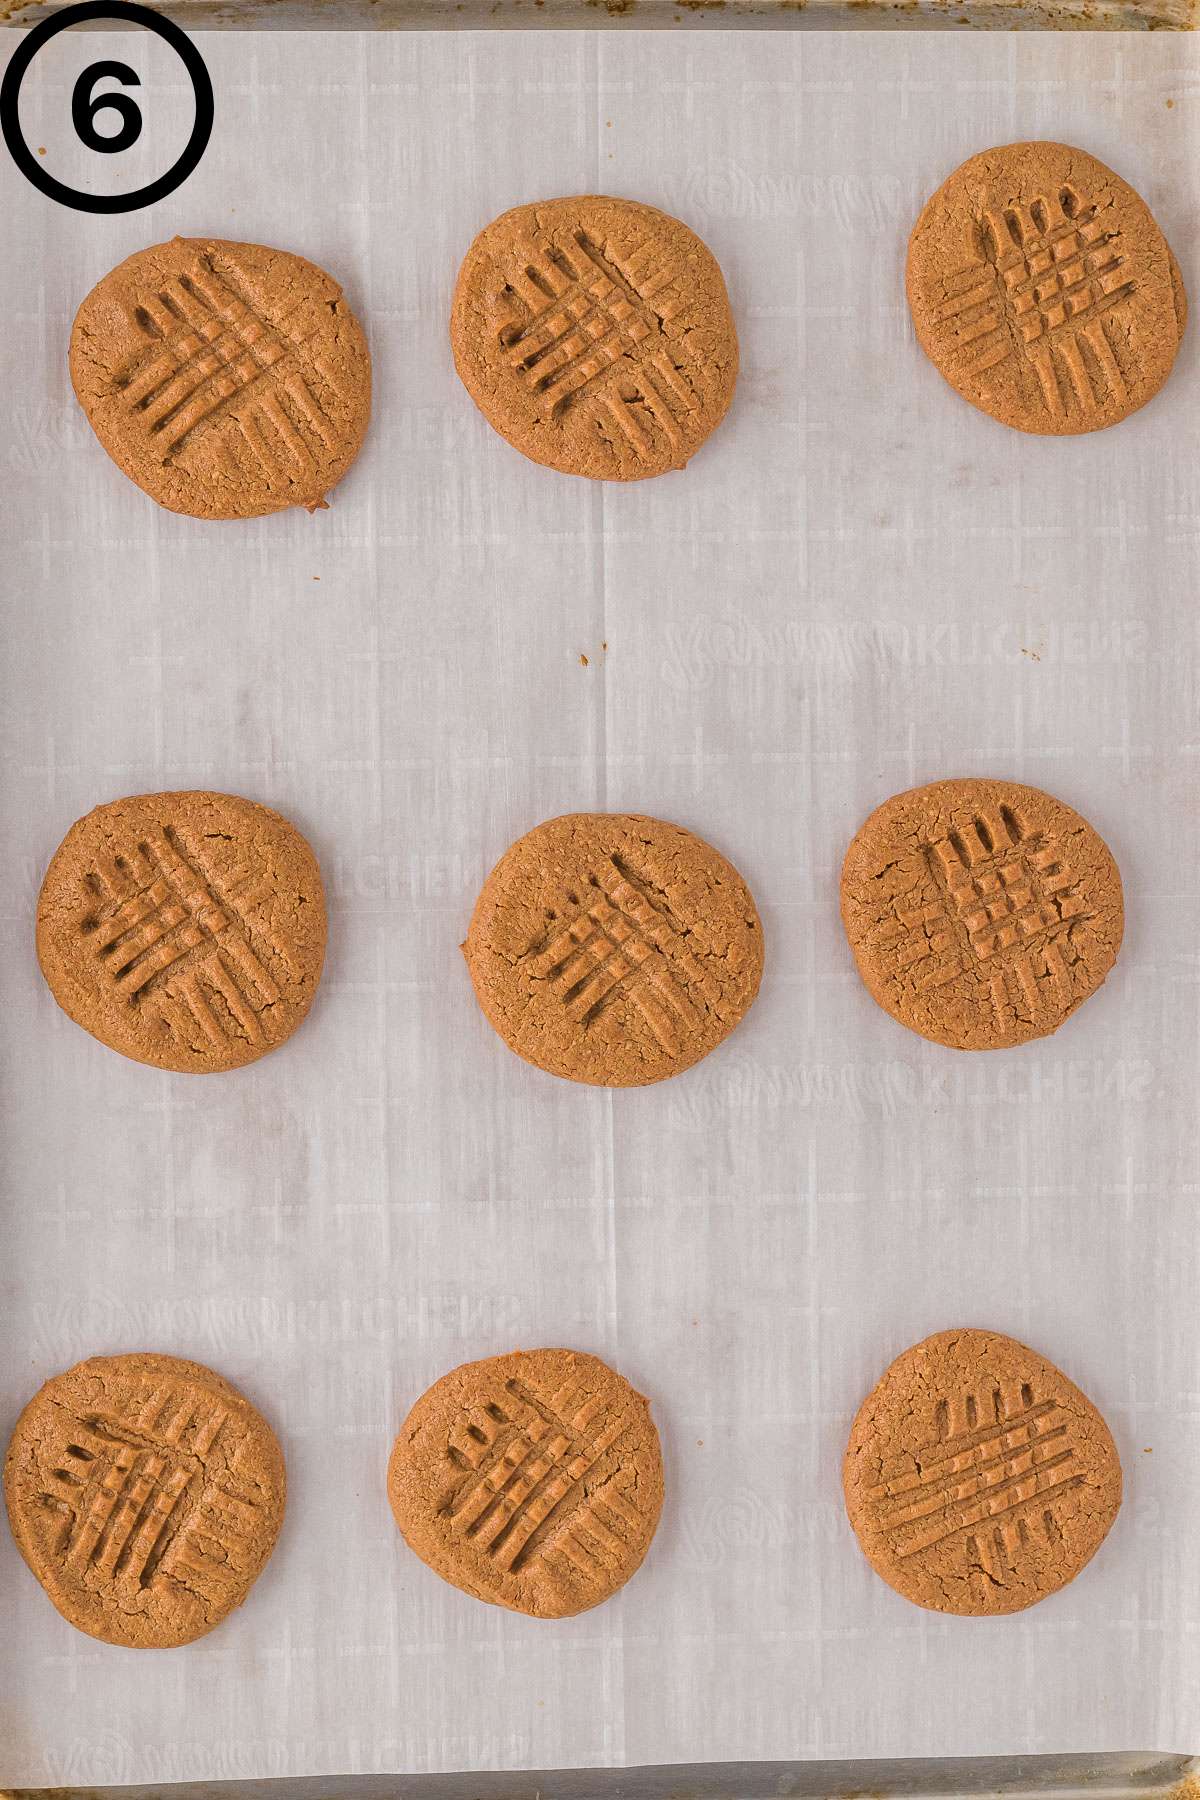 2 ingredient peanut butter cookies on a baking sheet.